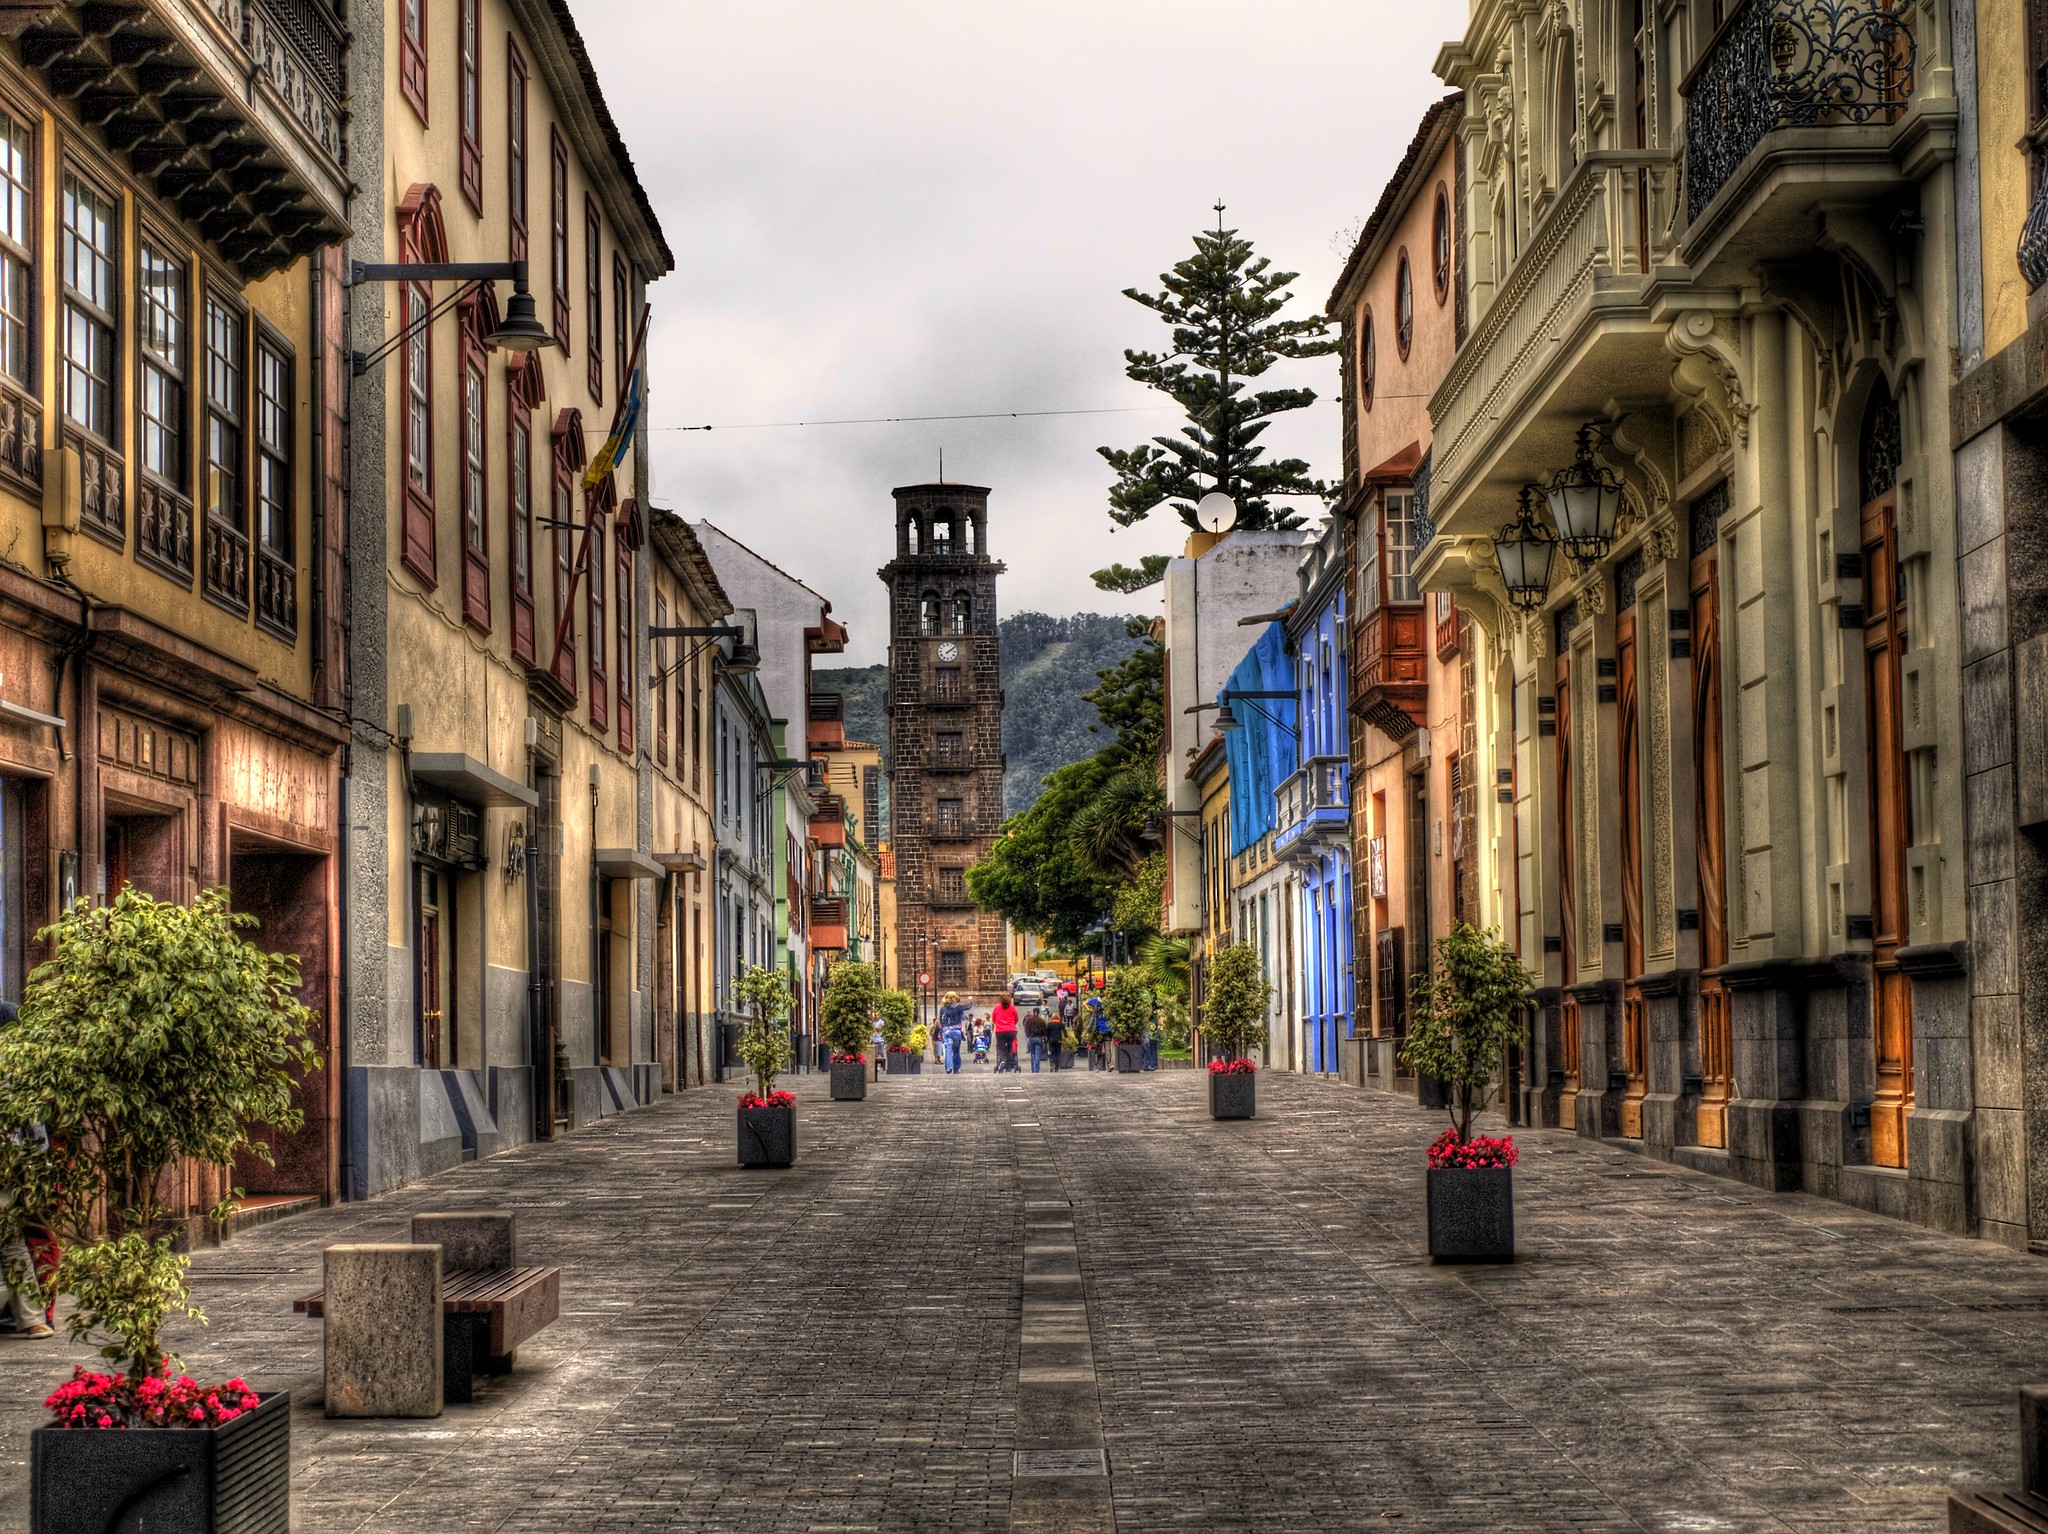 Cobbled street in the old city of San Cristobal de la Laguna